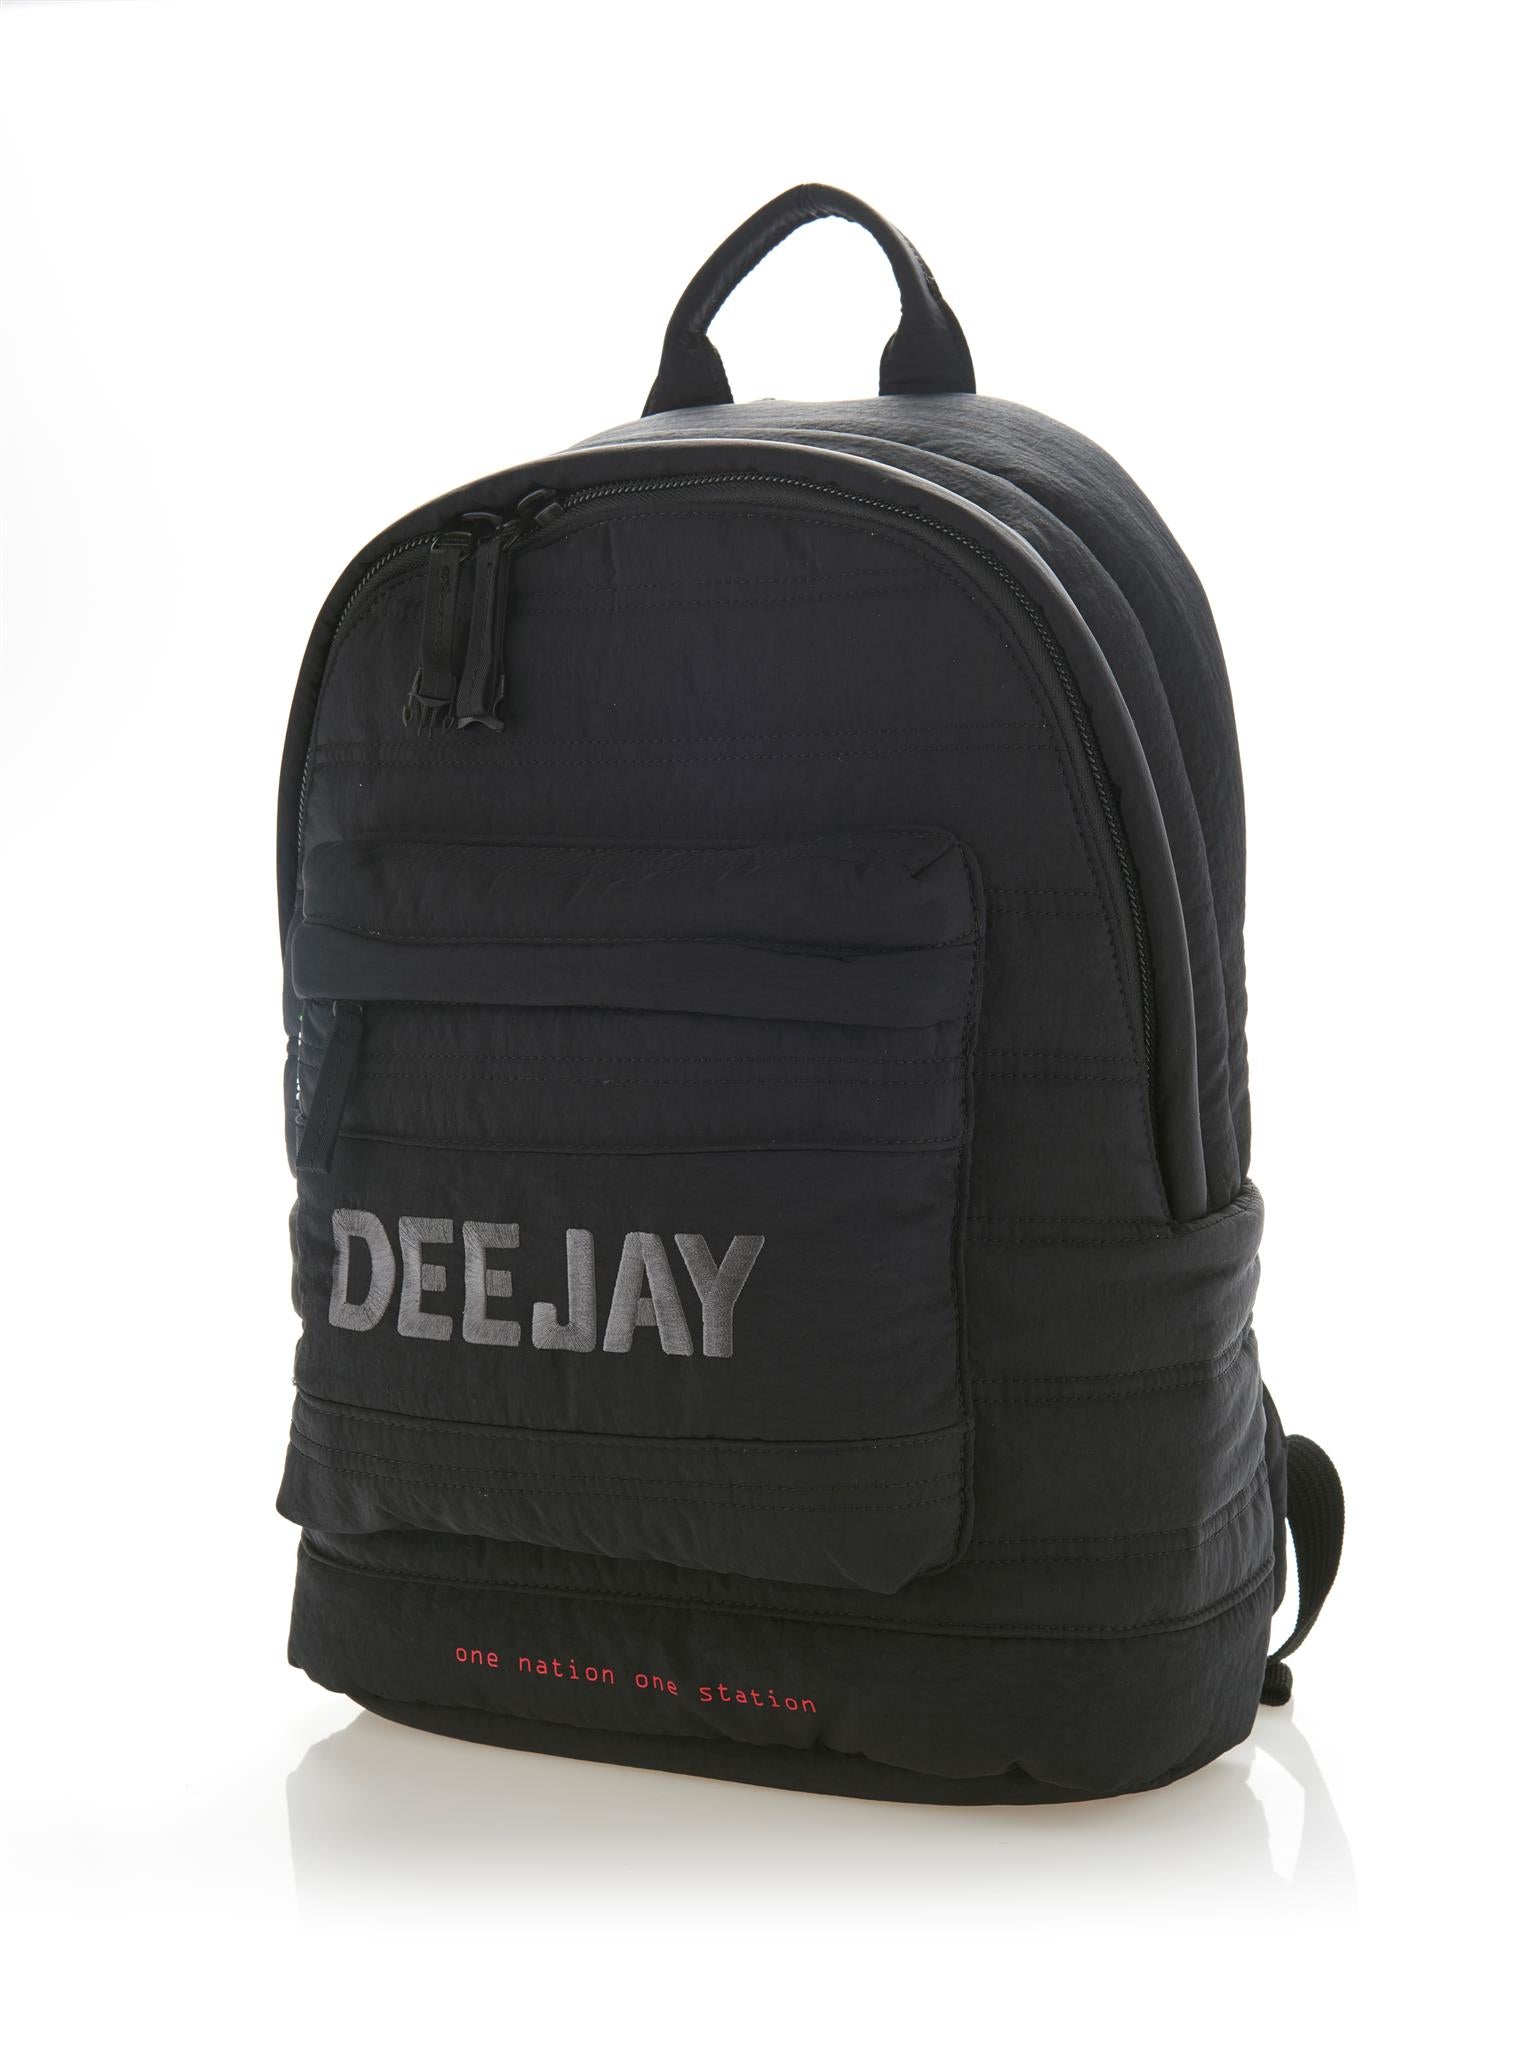 Mueslii original puffer laptop backpack made of high density nylon and Ykk zips, color black Deejay, capacity 25 liters.